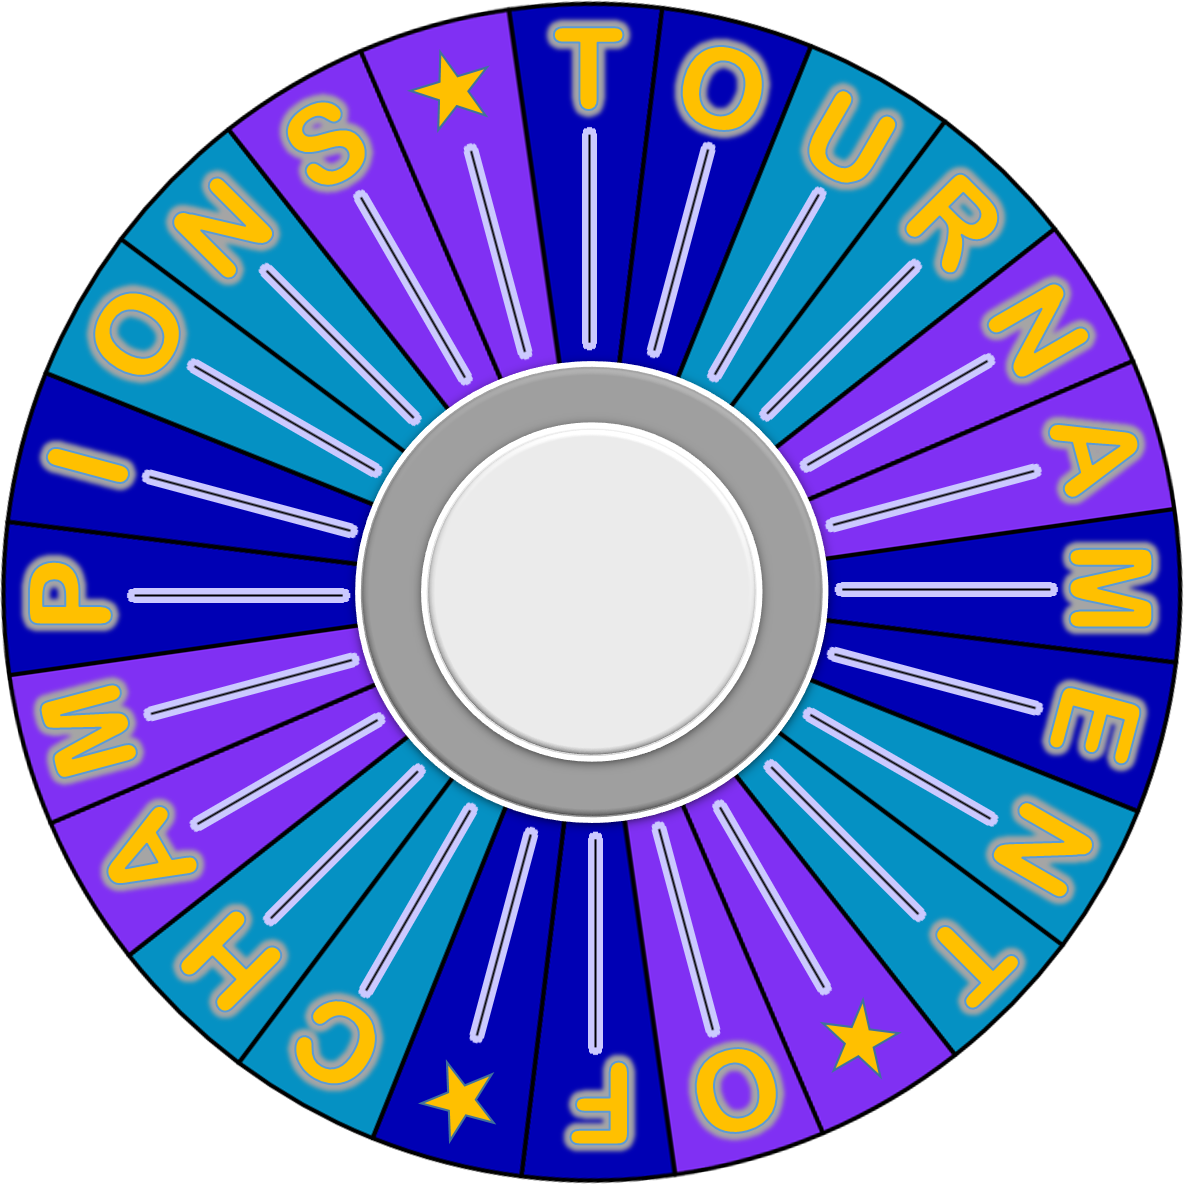 Tournament of Champions Bonus Wheel (FIXED) by LeafMan813 on DeviantArt